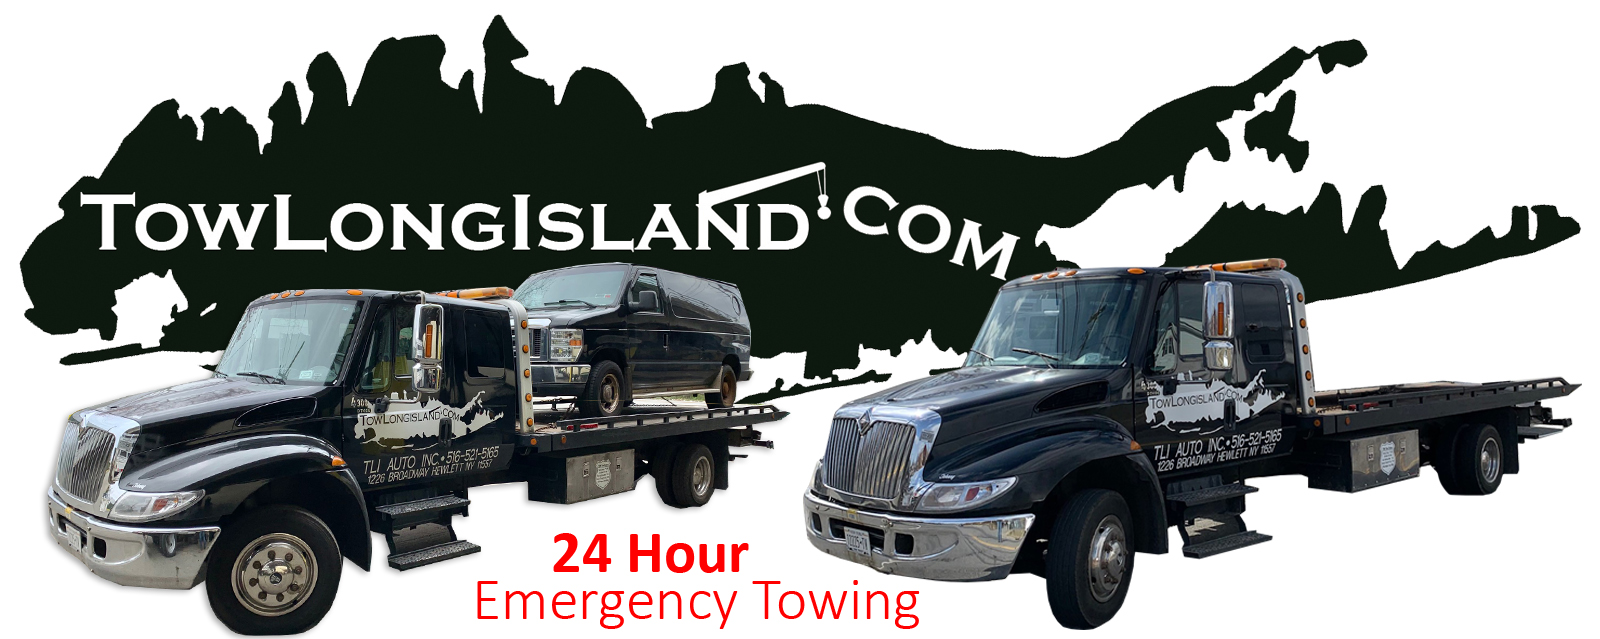 24 Hour Towing Service | Freeport, Long Island, Nassau County, New York | TowLongIsland.com 516.521.5165